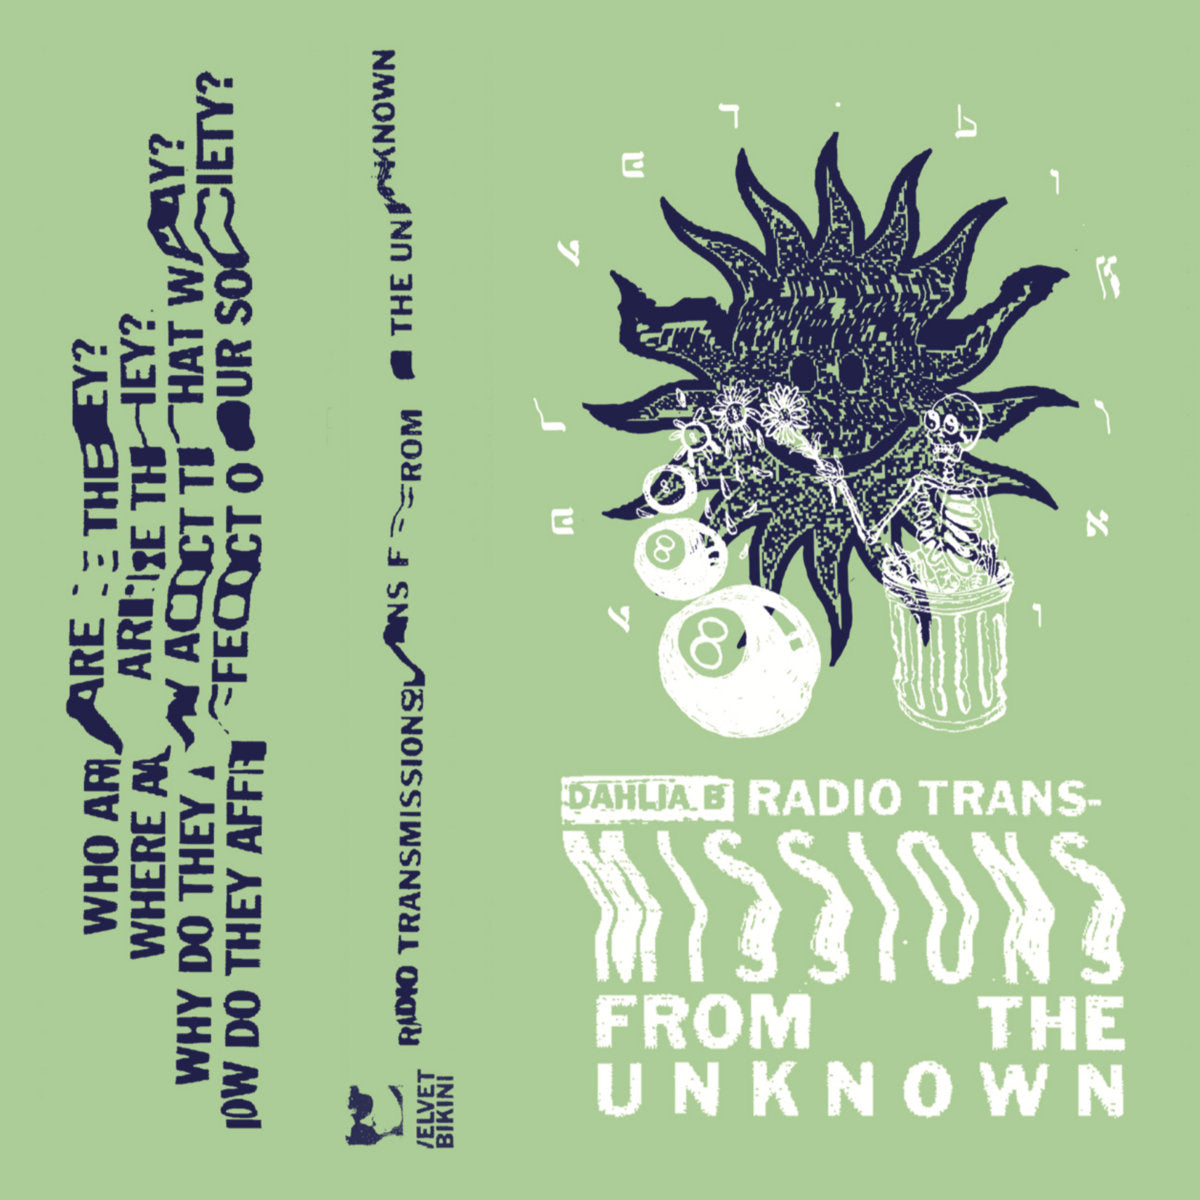 Dahlia B. 'Radio Transmissions From The Unknown' LP [Velvet Bikini]